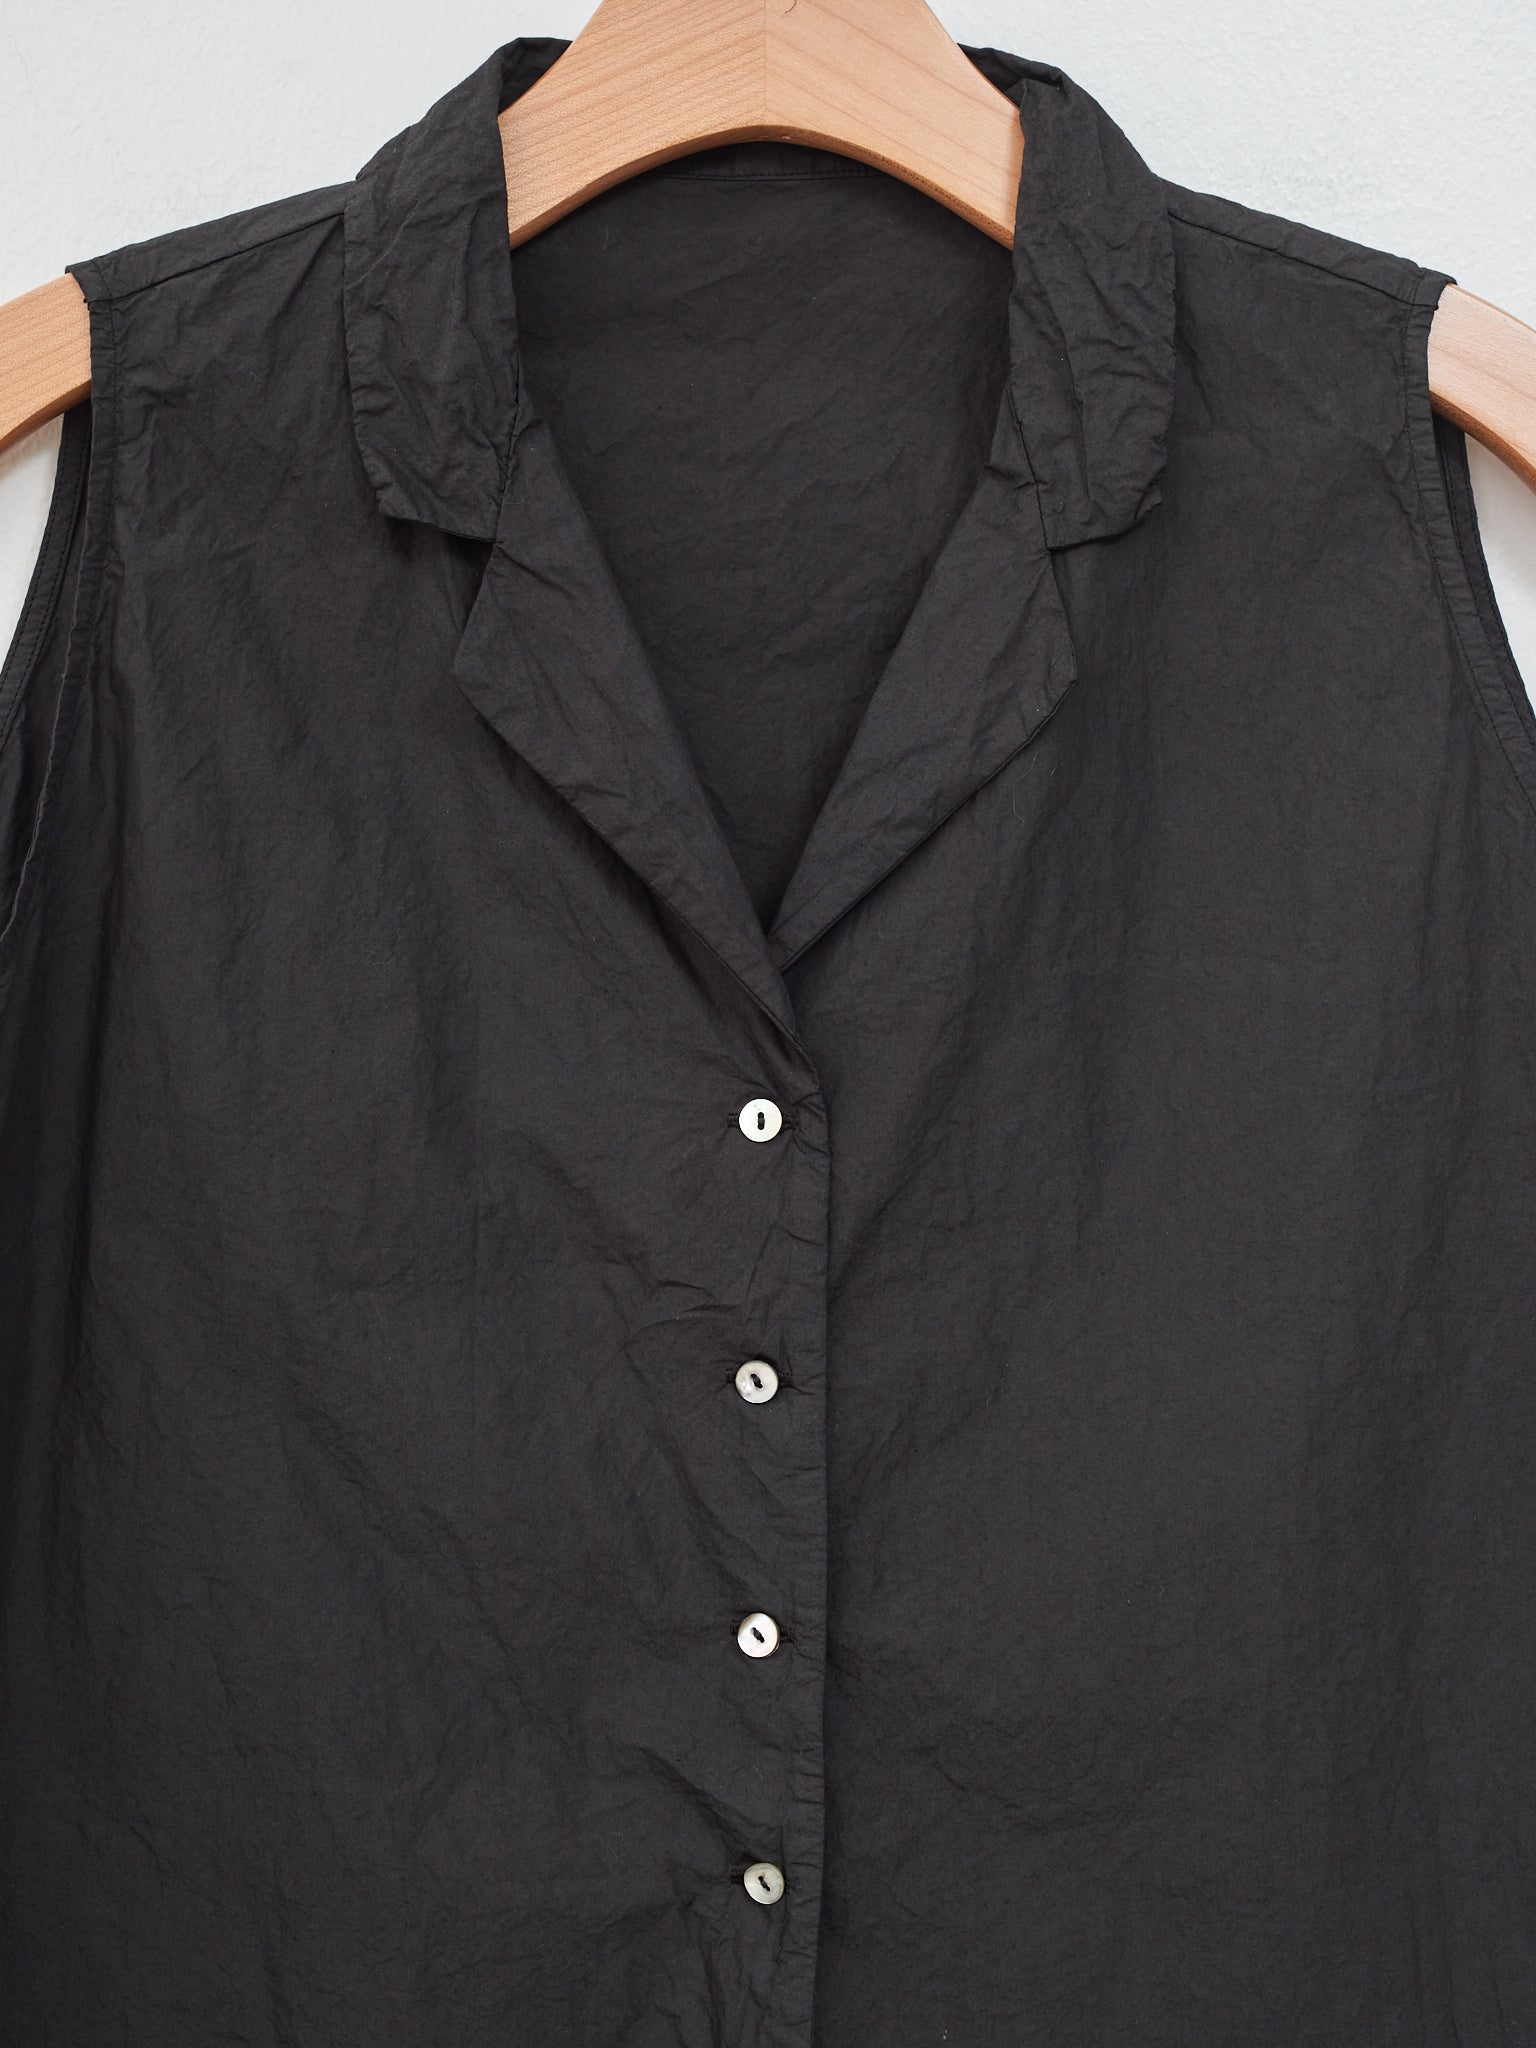 Namu Shop - Album di Famiglia Sleeveless Collar Shirt TC - Black